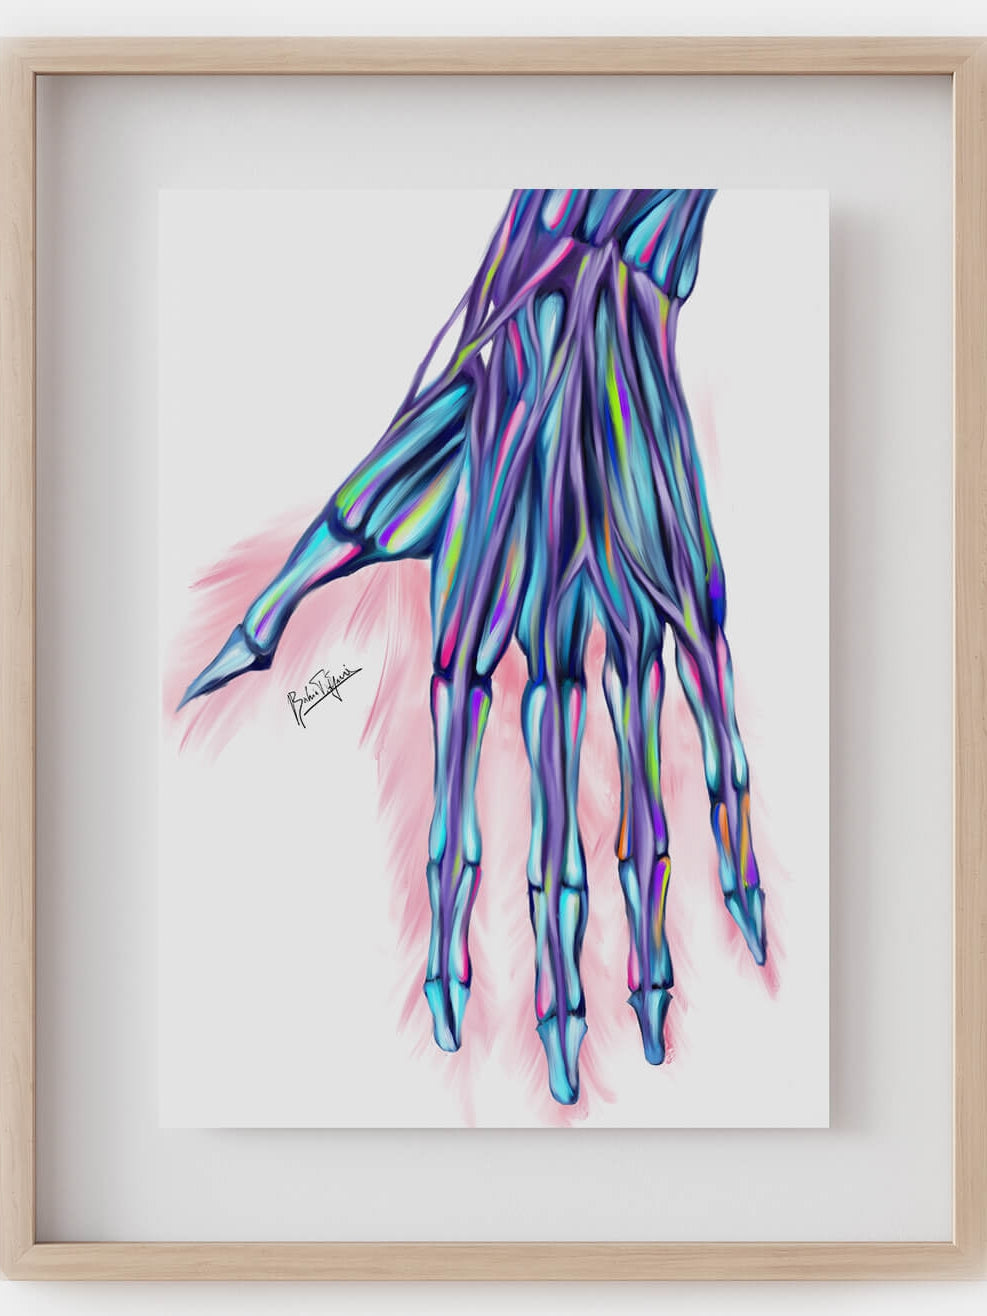 Abstract hand anatomy art print-Hand bones muscles artwork-Musculoskeletal anatomy-Plastic surgeon Orthopedic surgeon gift-Hand surgeon gift